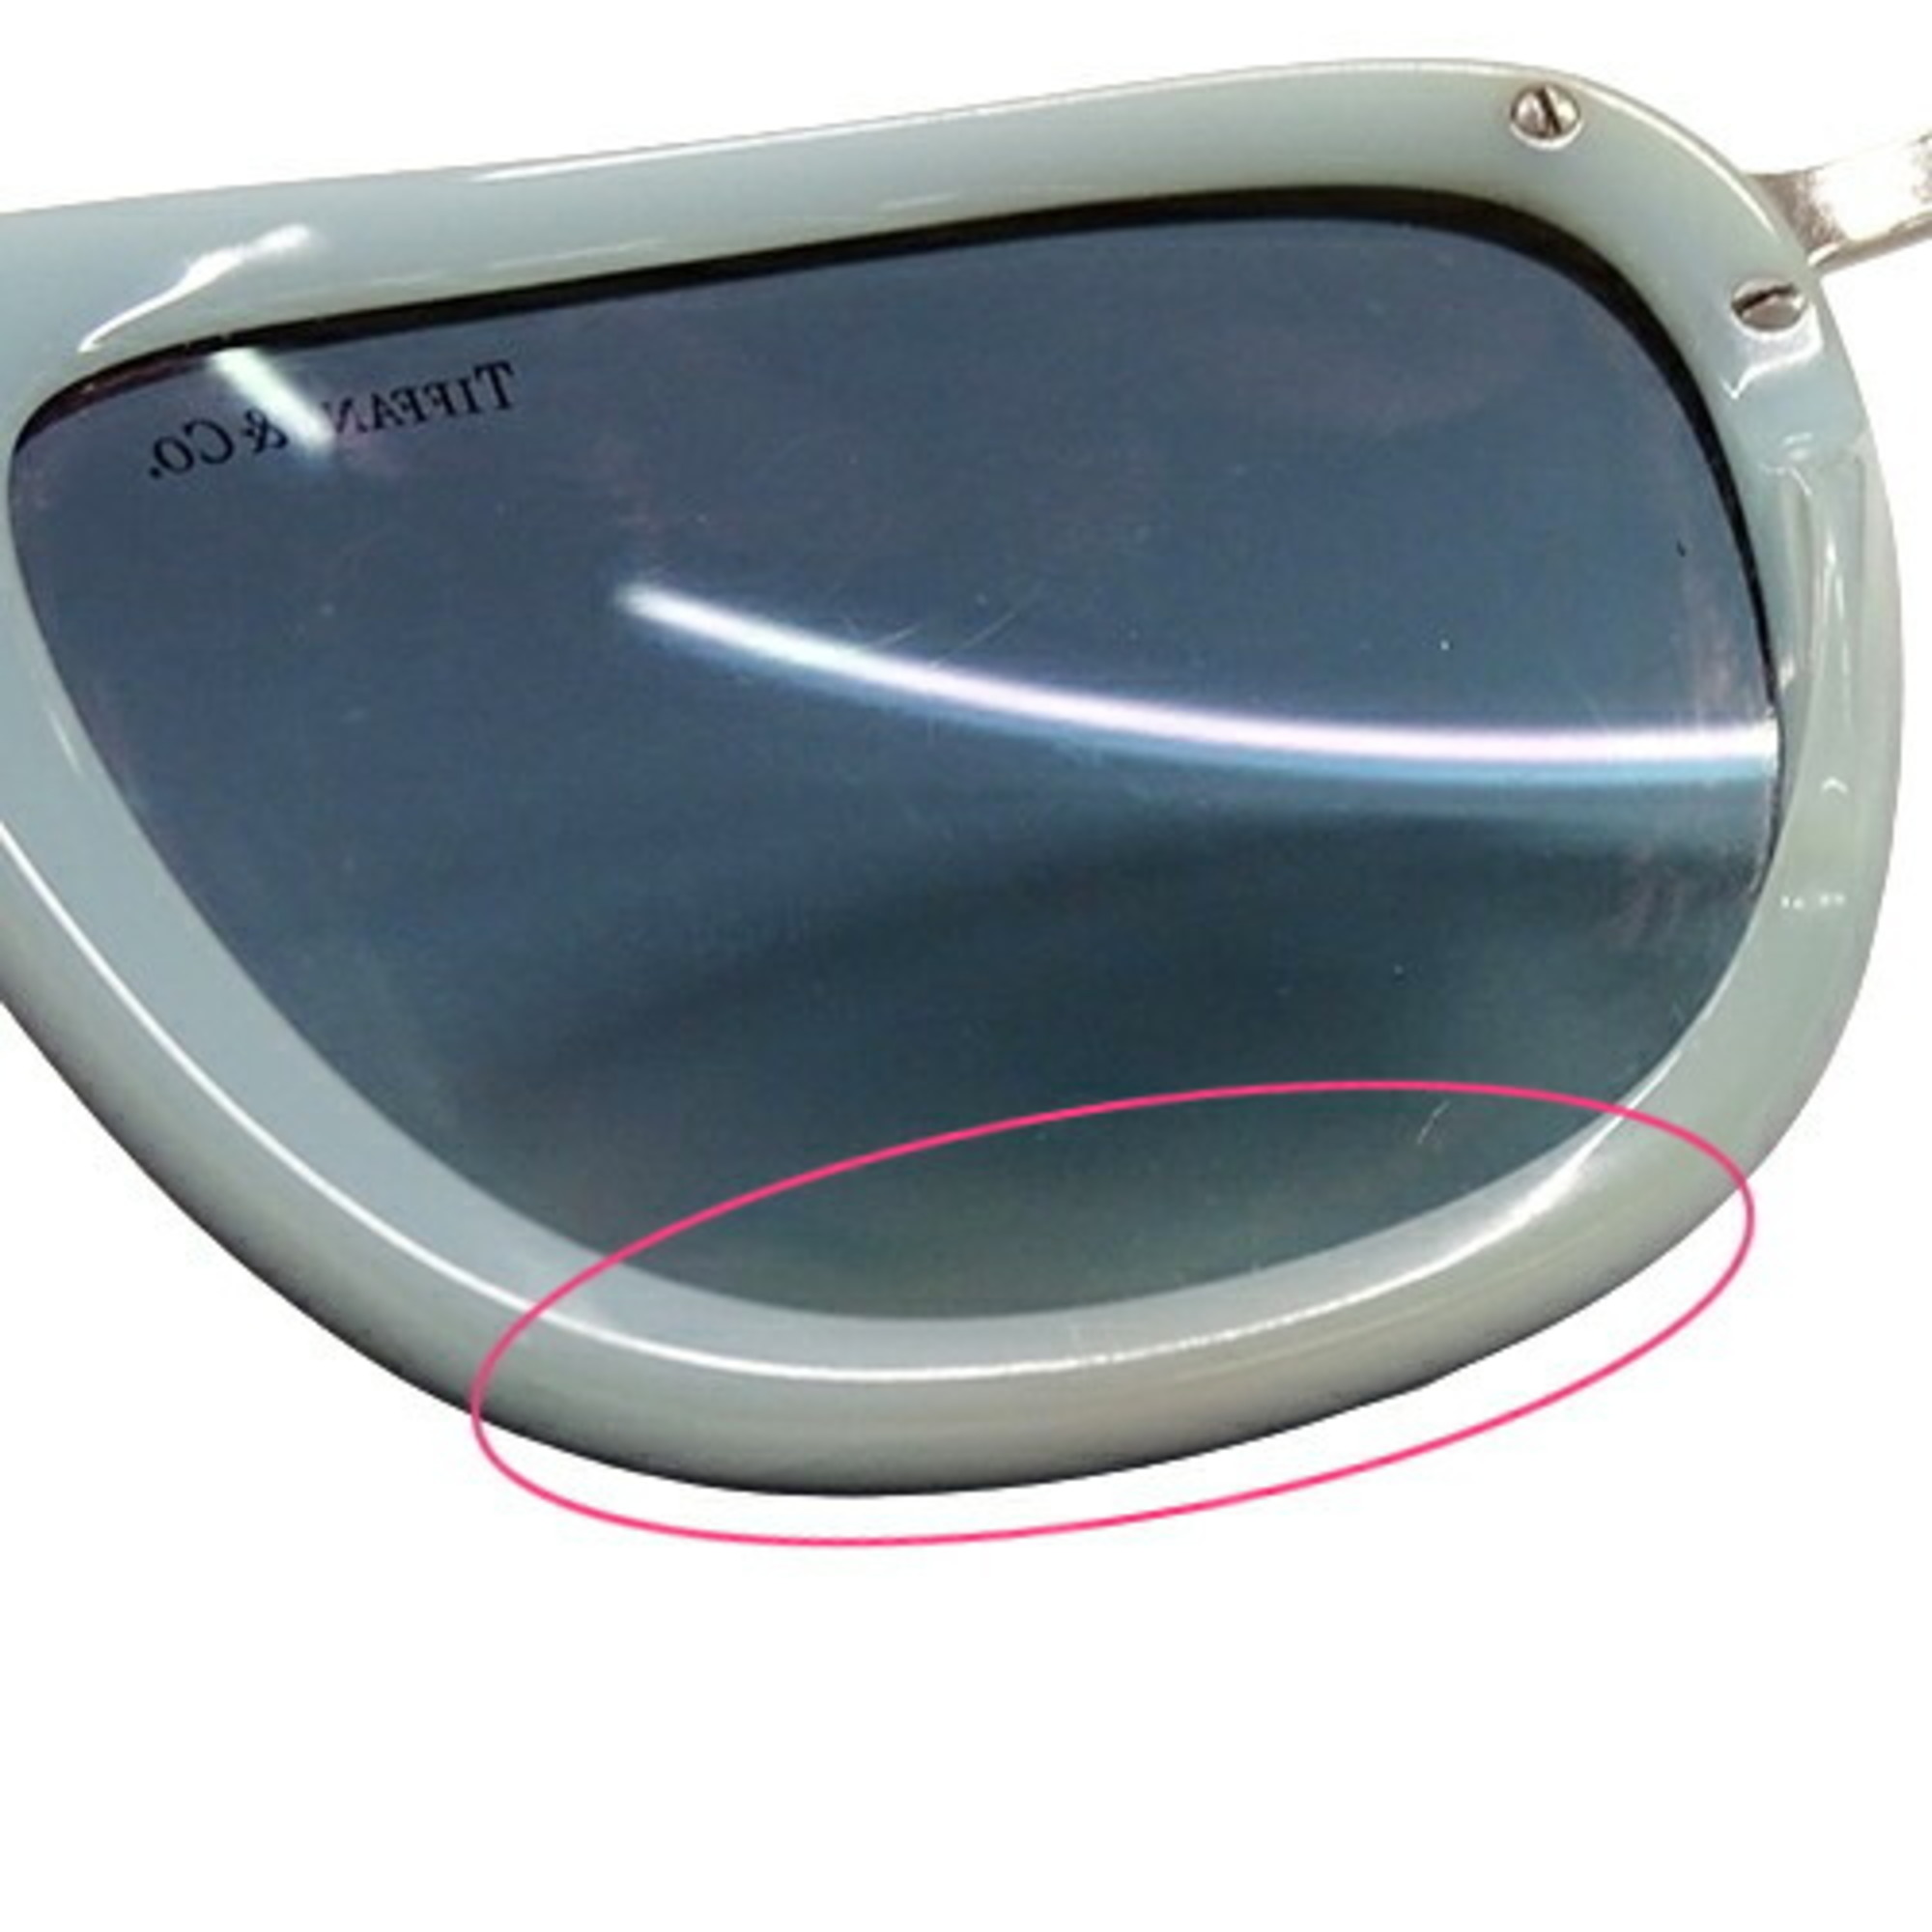 Tiffany TIFFANY&Co. Sunglasses Women's Brand Plastic Black Blue TF4123-F 8055/9S Size 55□18 140